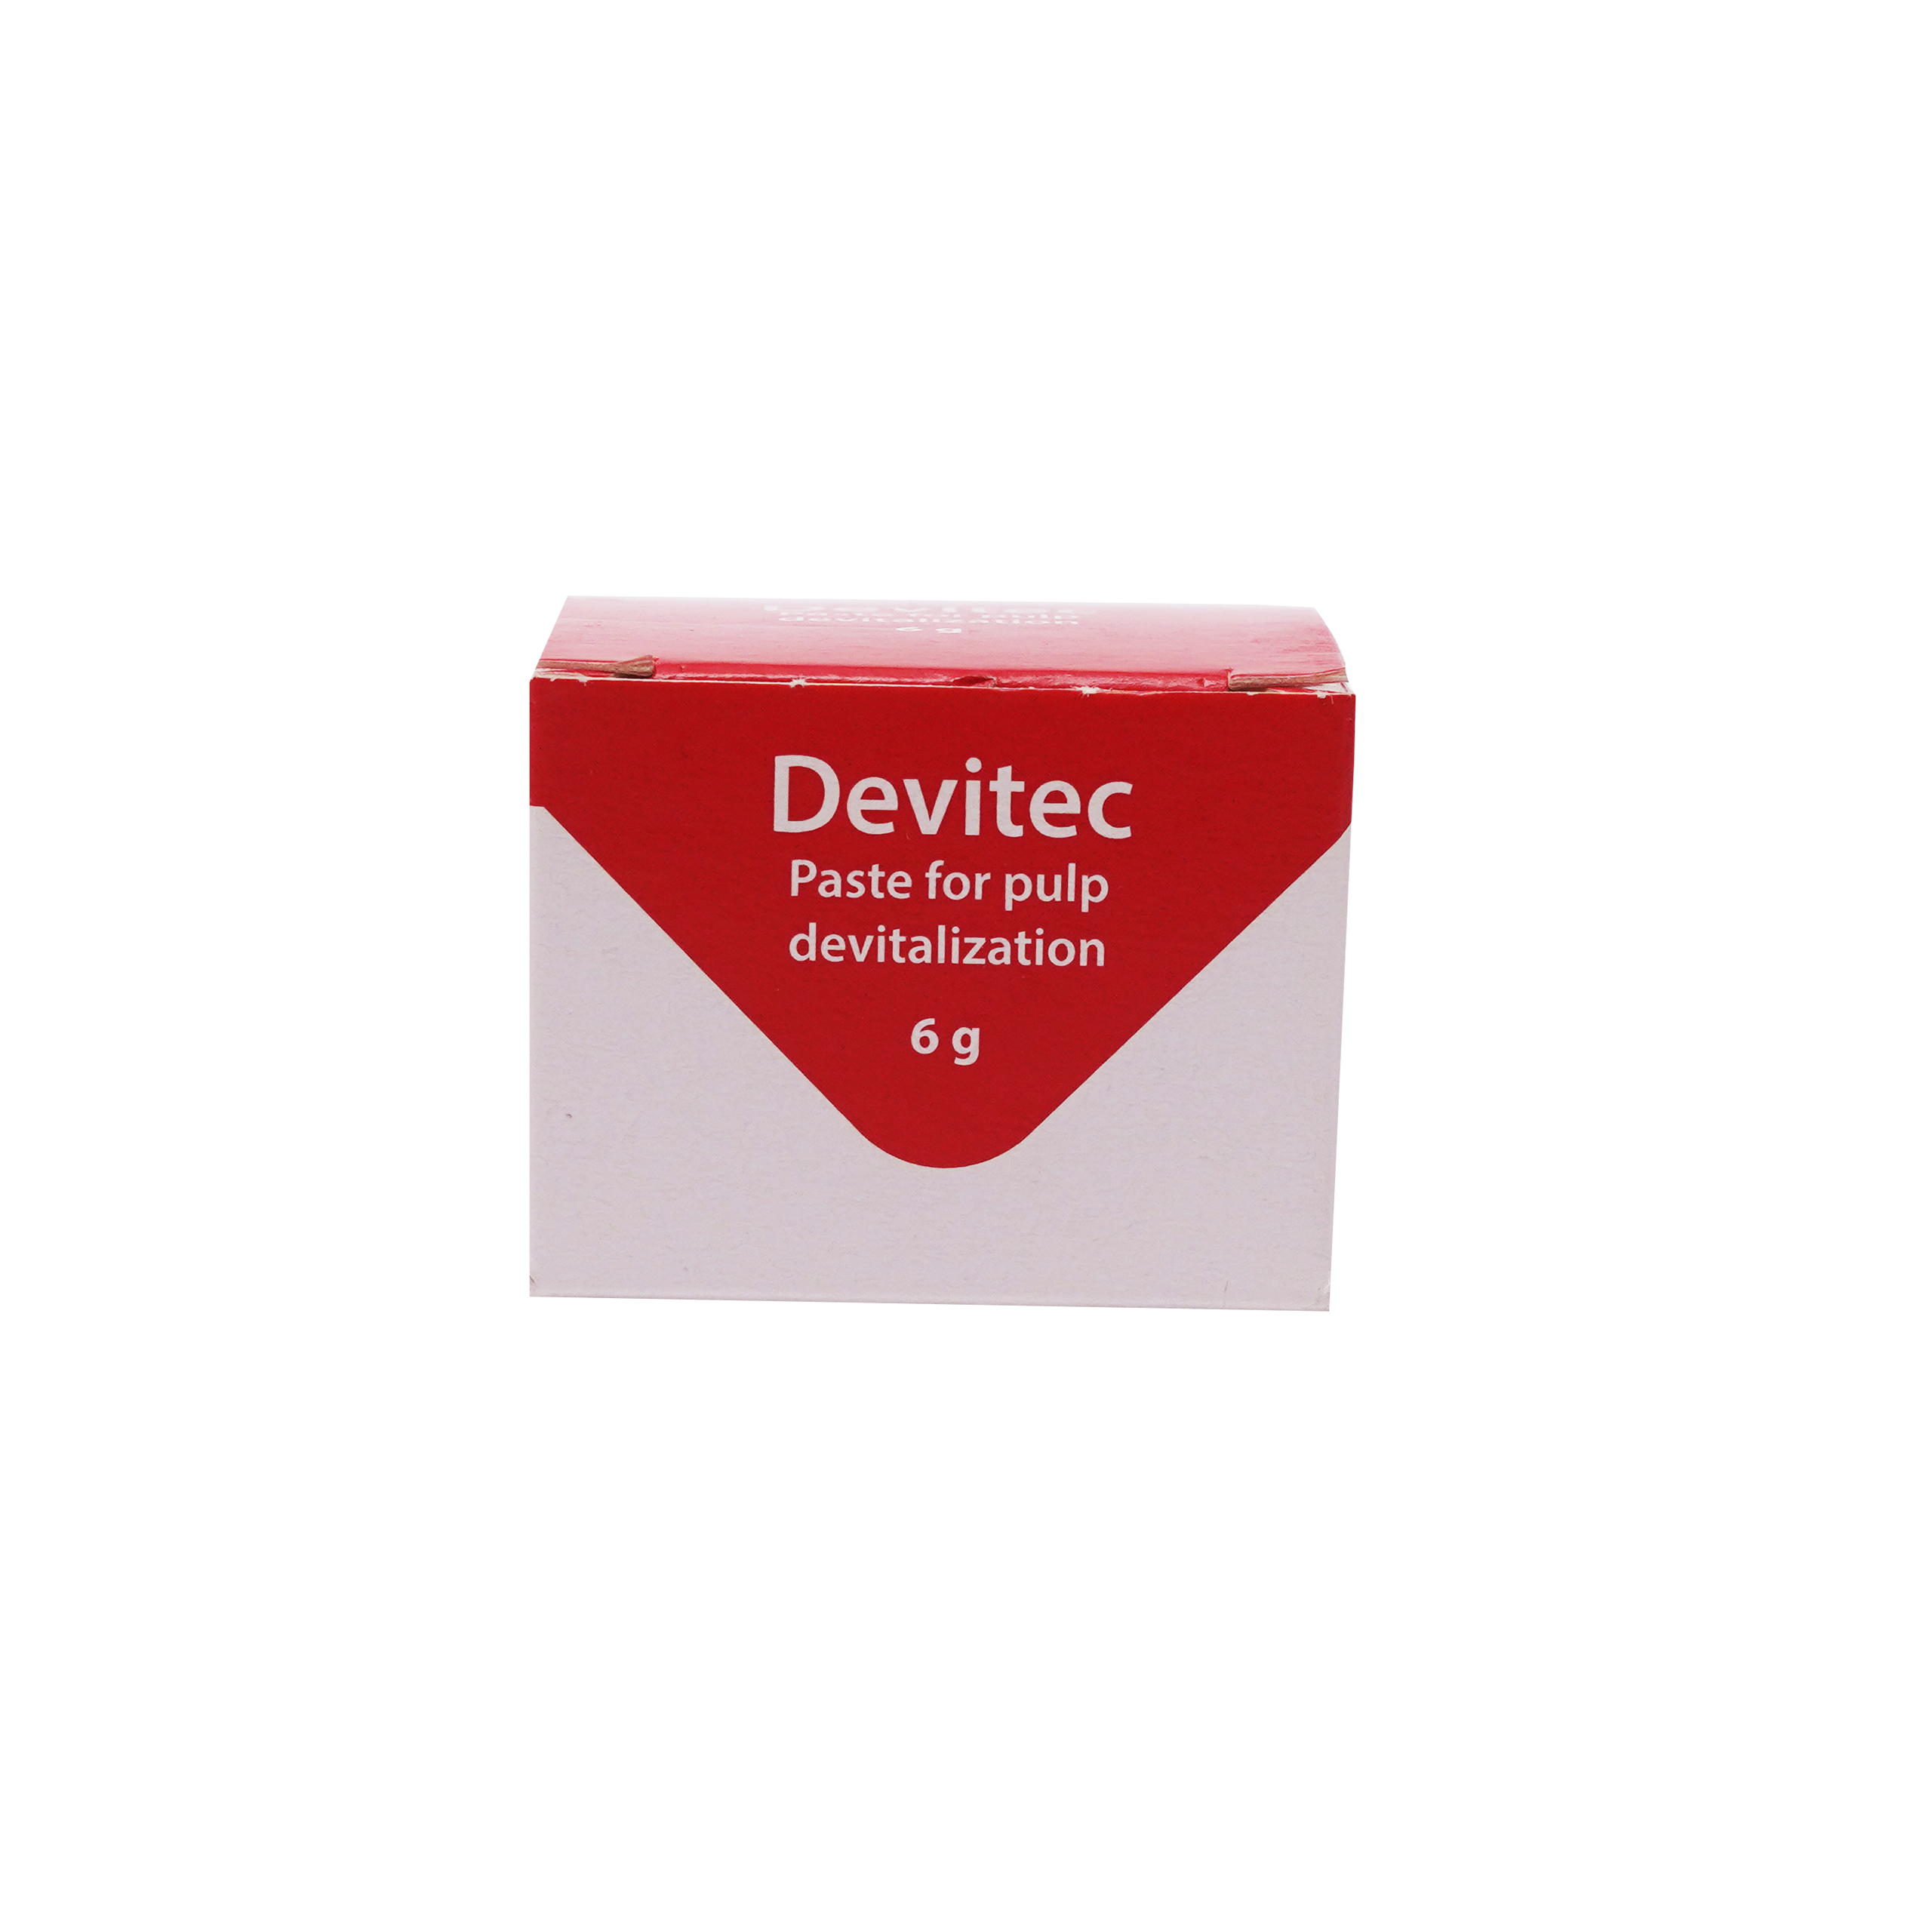 PD Devitec (Paste For Pulp Devitalization) - Switzerland